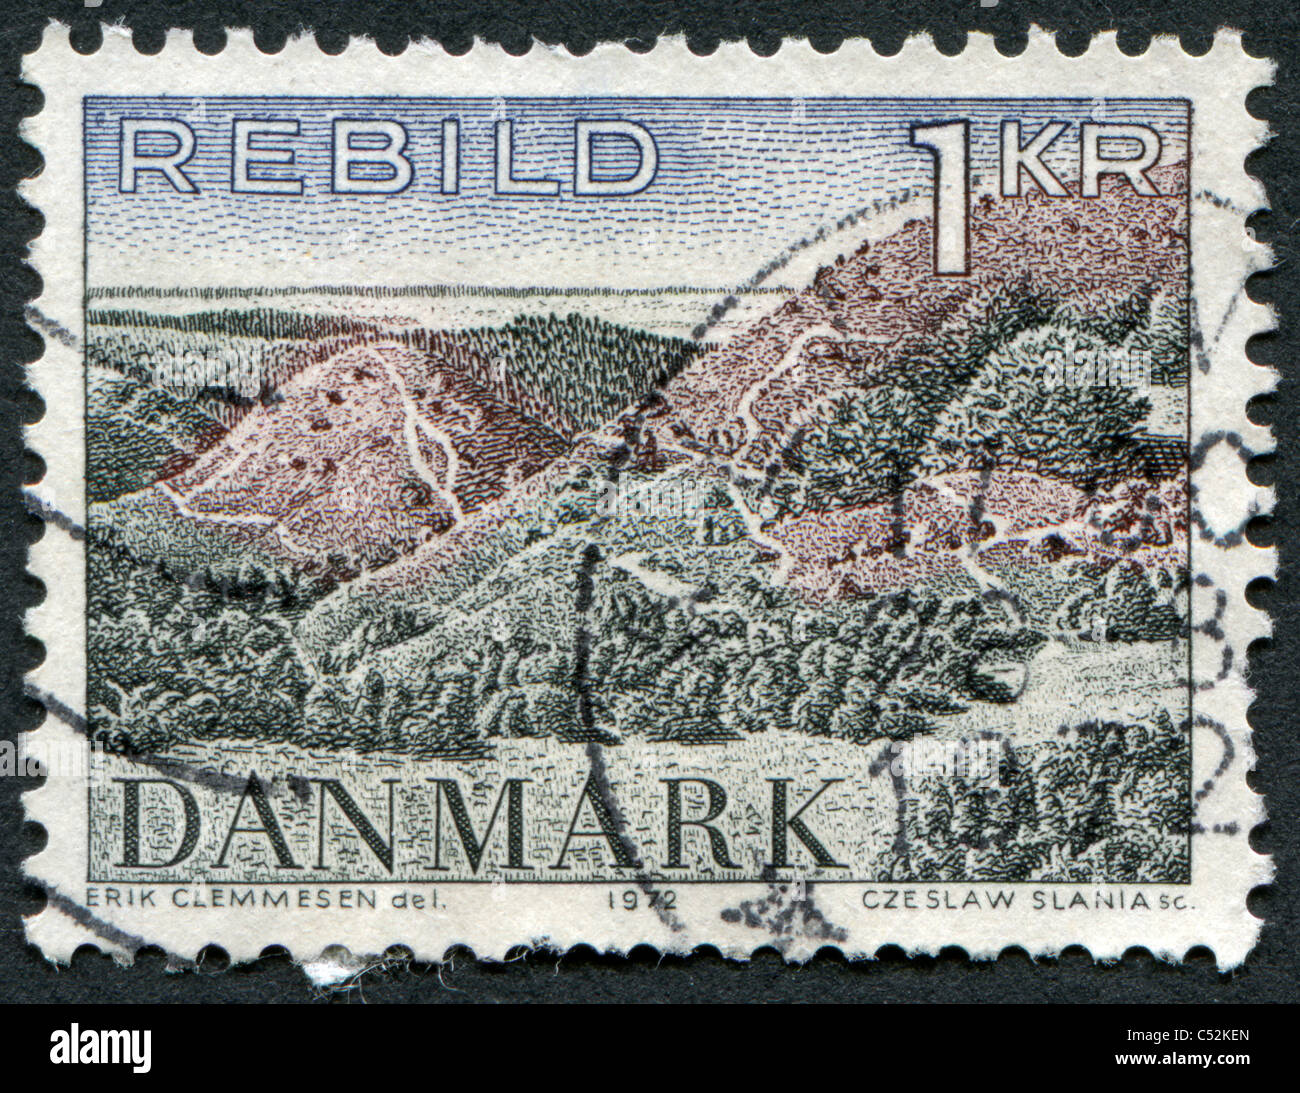 DENMARK 1972: A stamp printed in the Denmark, shows Rebild National Park Stock Photo